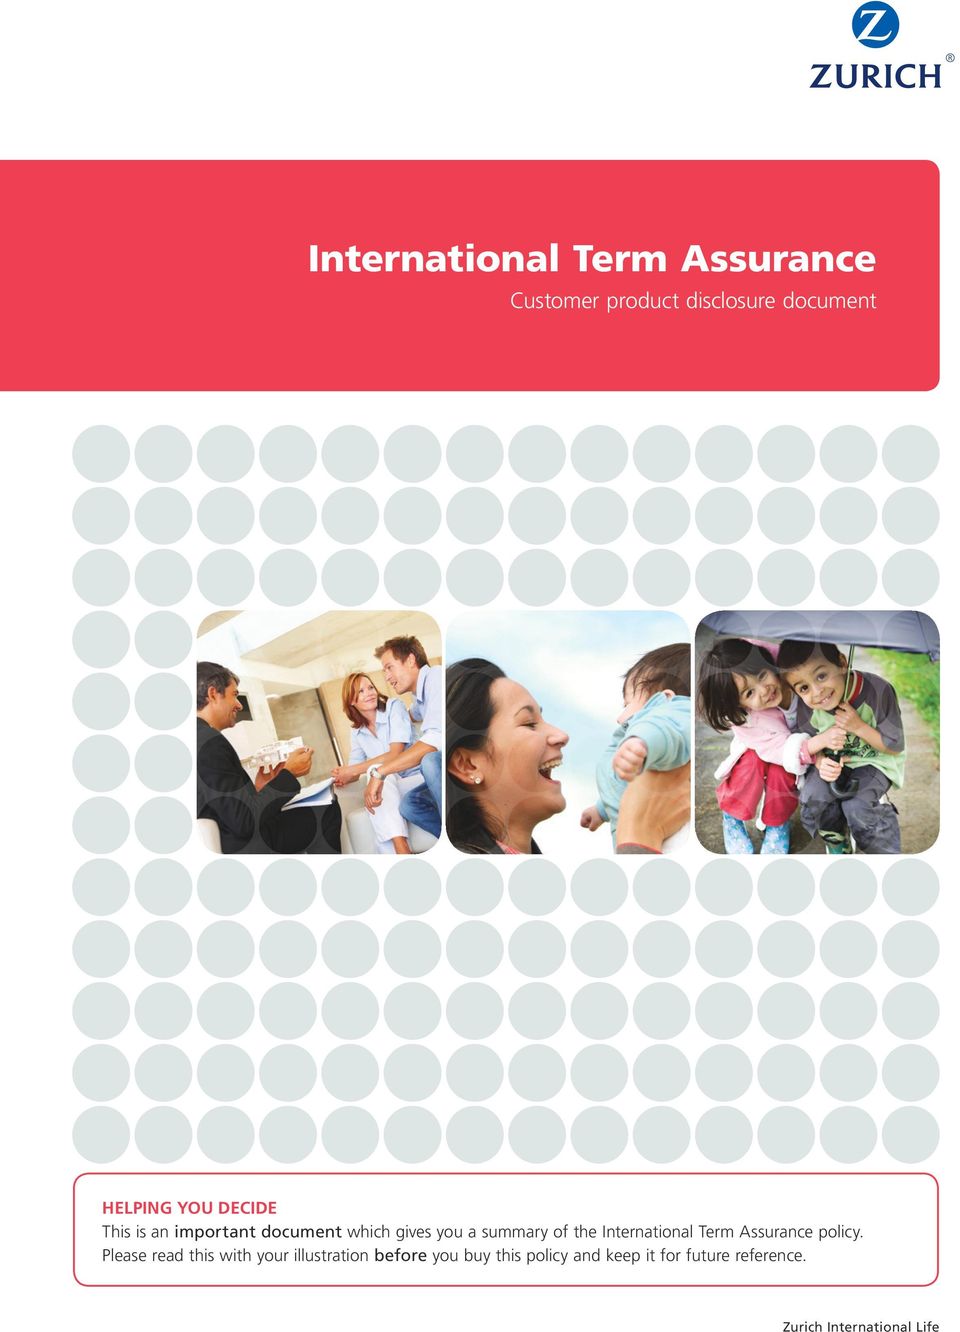 International Term Assurance policy.